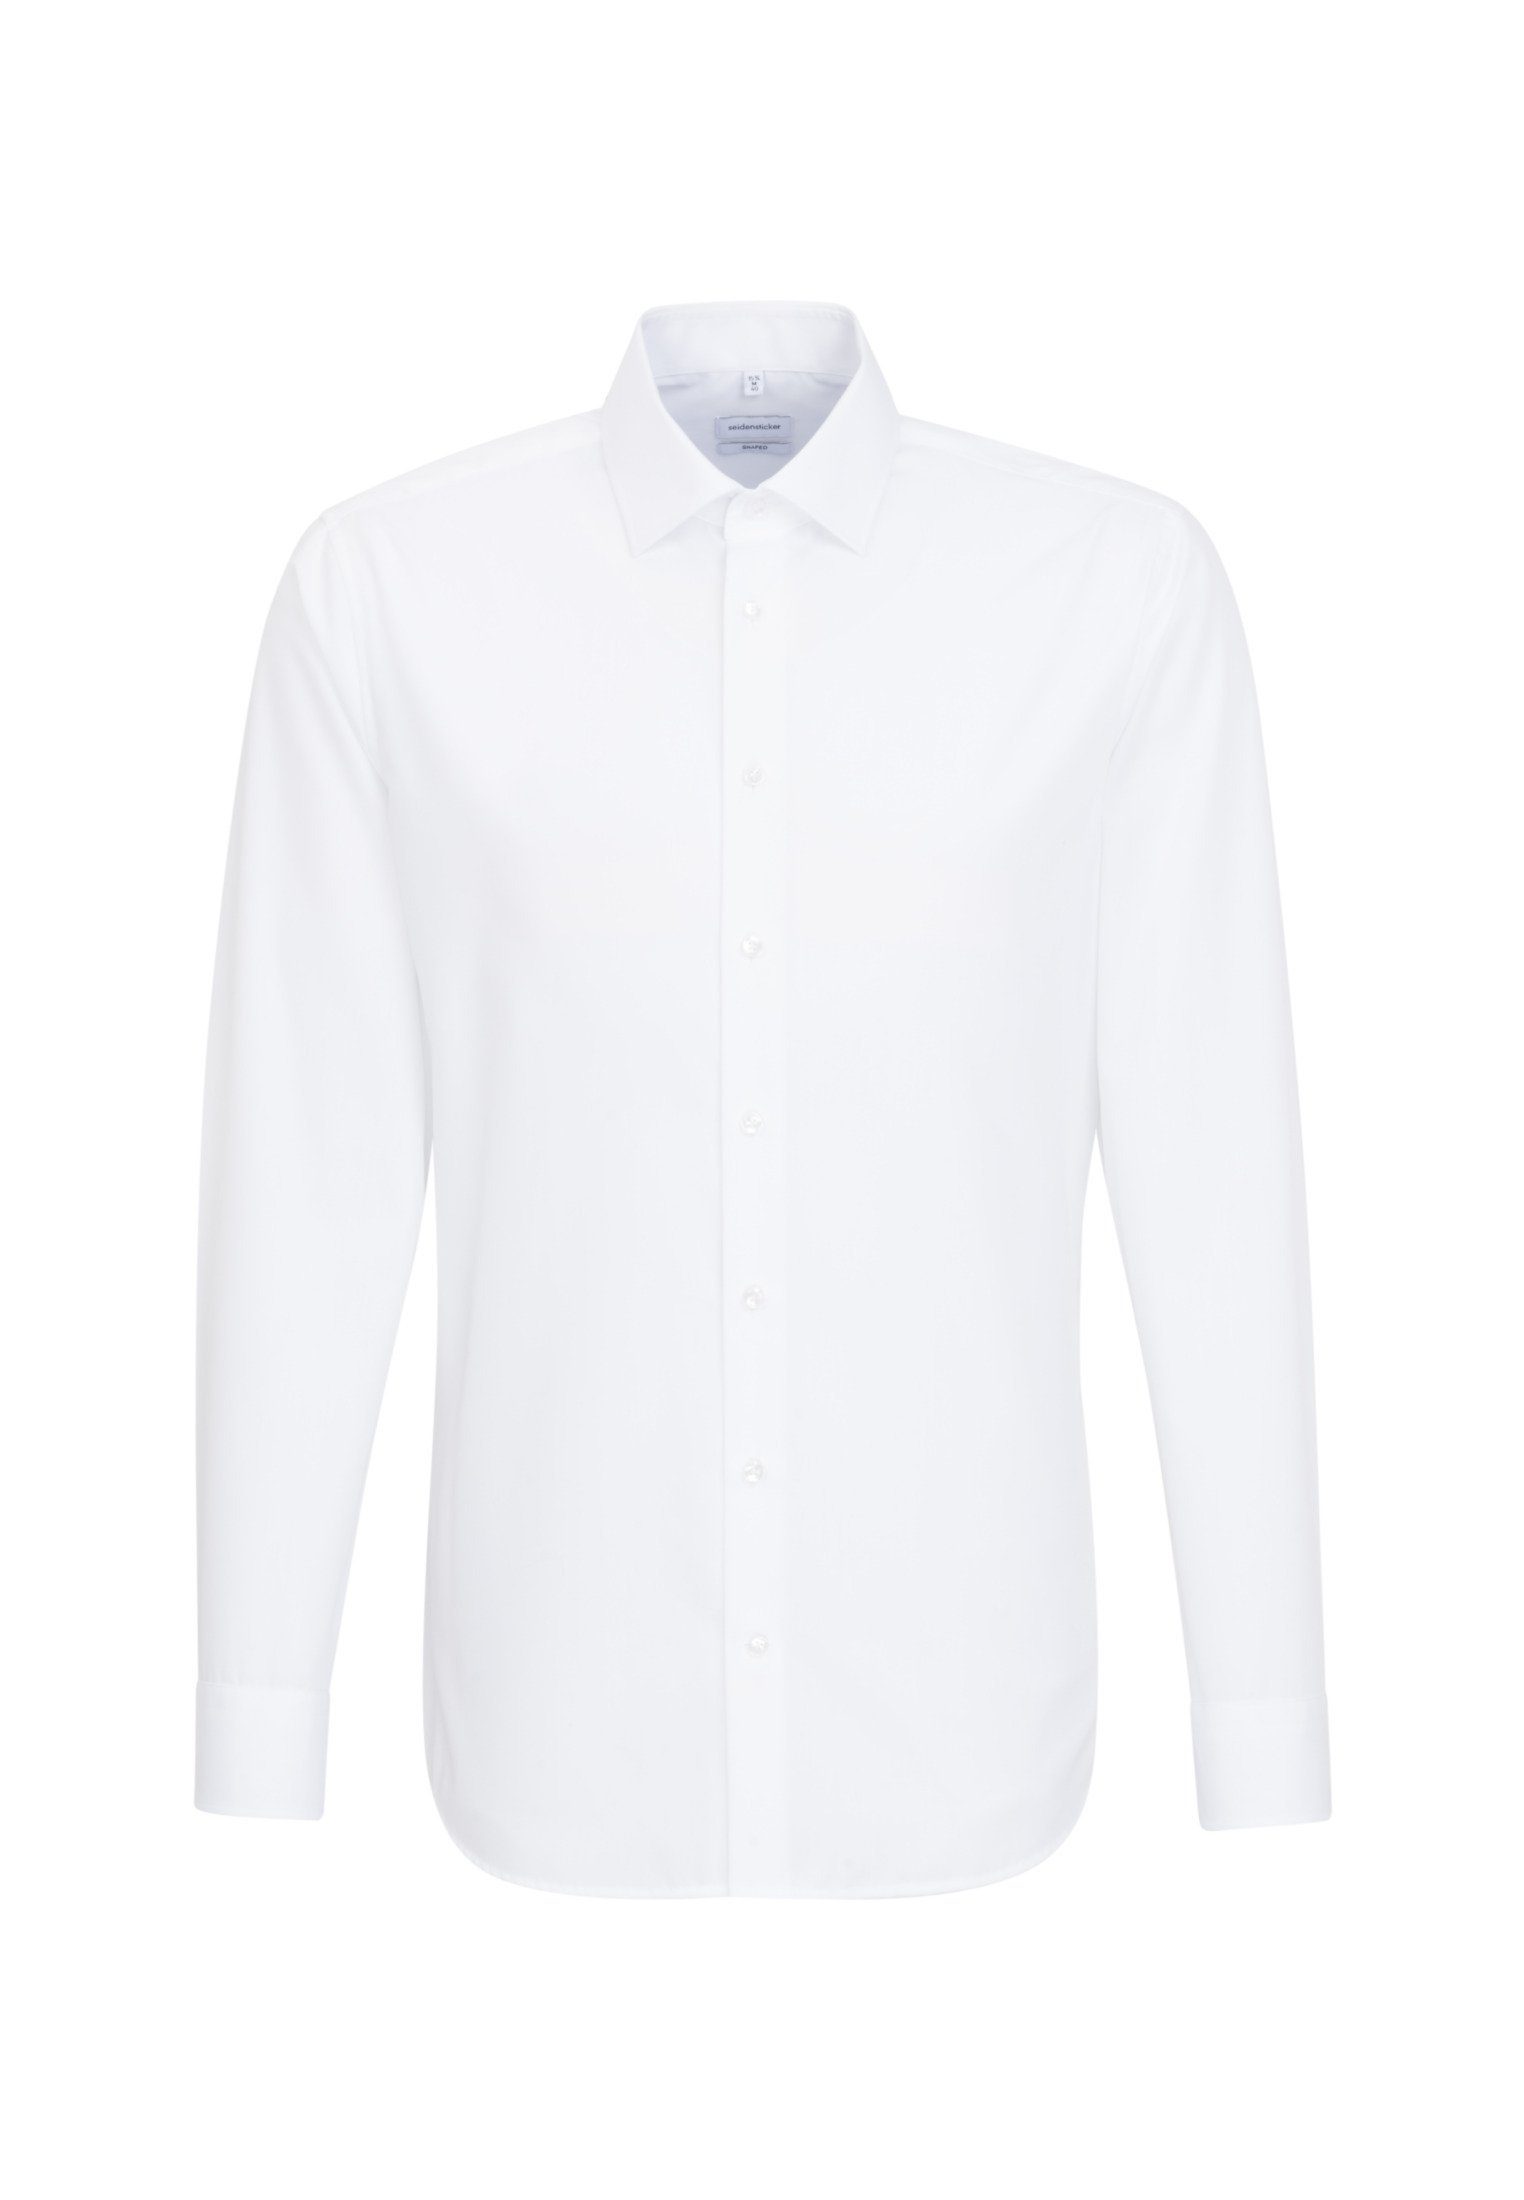 seidensticker Uni Shaped Kentkragen Extra Arm langer Weiß Businesshemd Shaped